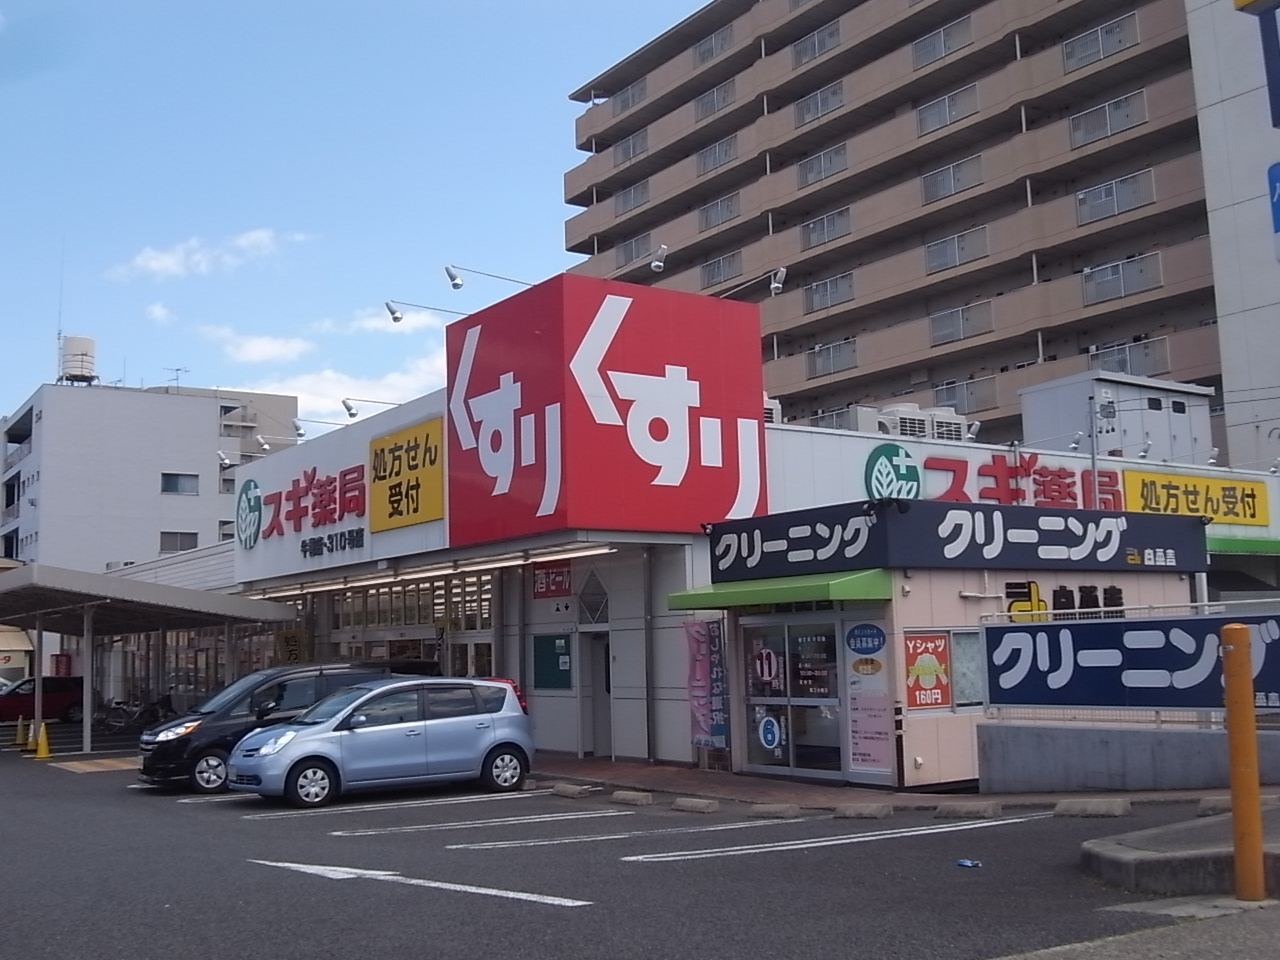 Dorakkusutoa. Cedar pharmacy Ushimaki shop 277m until (drugstore)